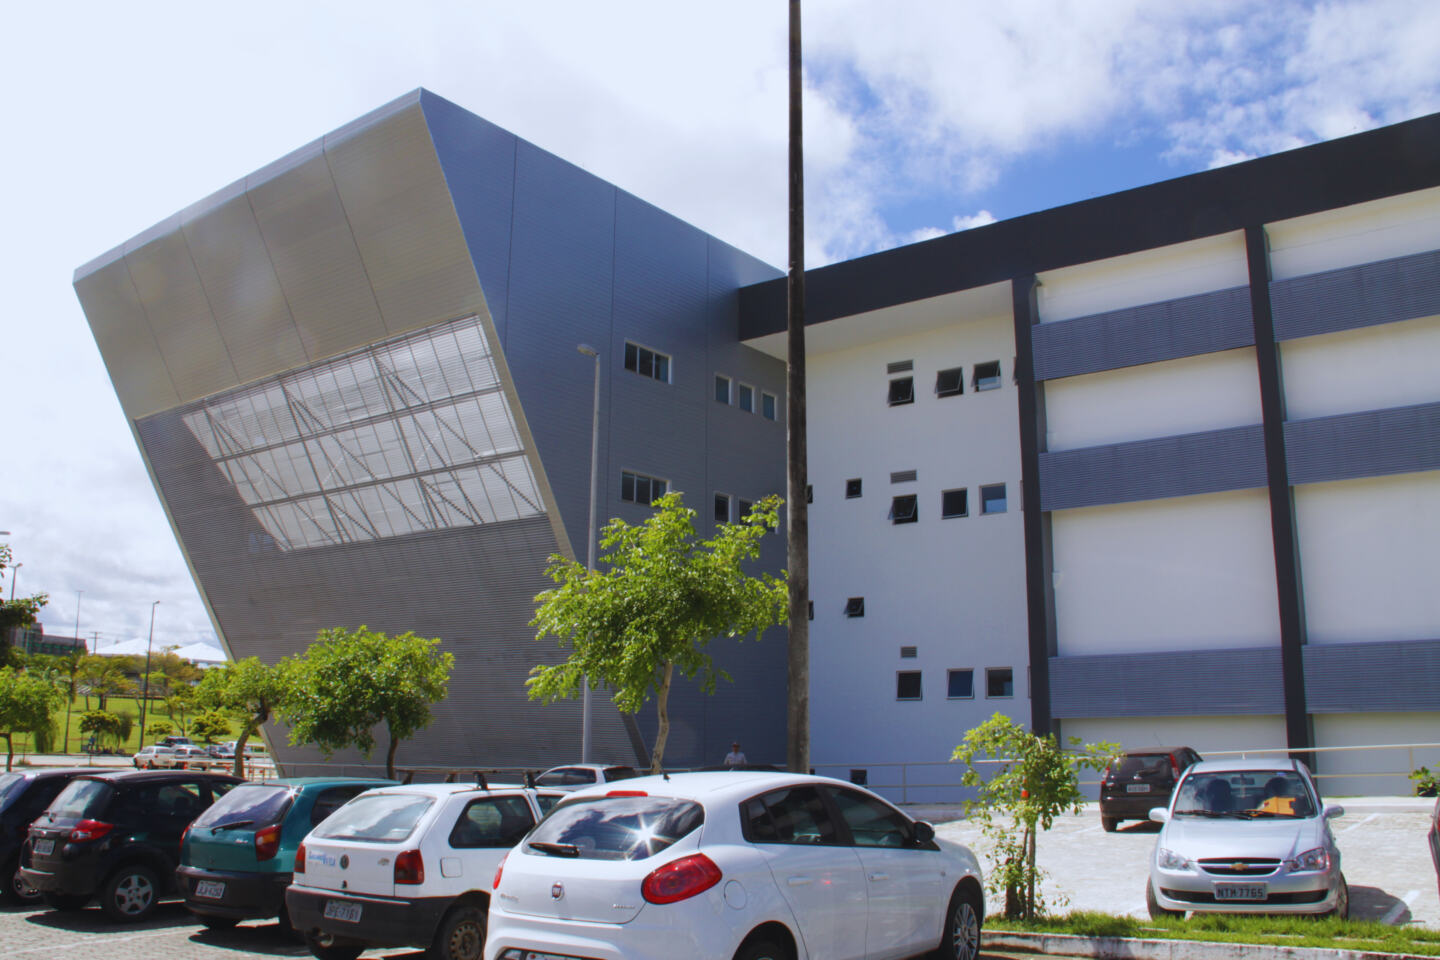 Anexo II – Assembléia Legislativa da Bahia